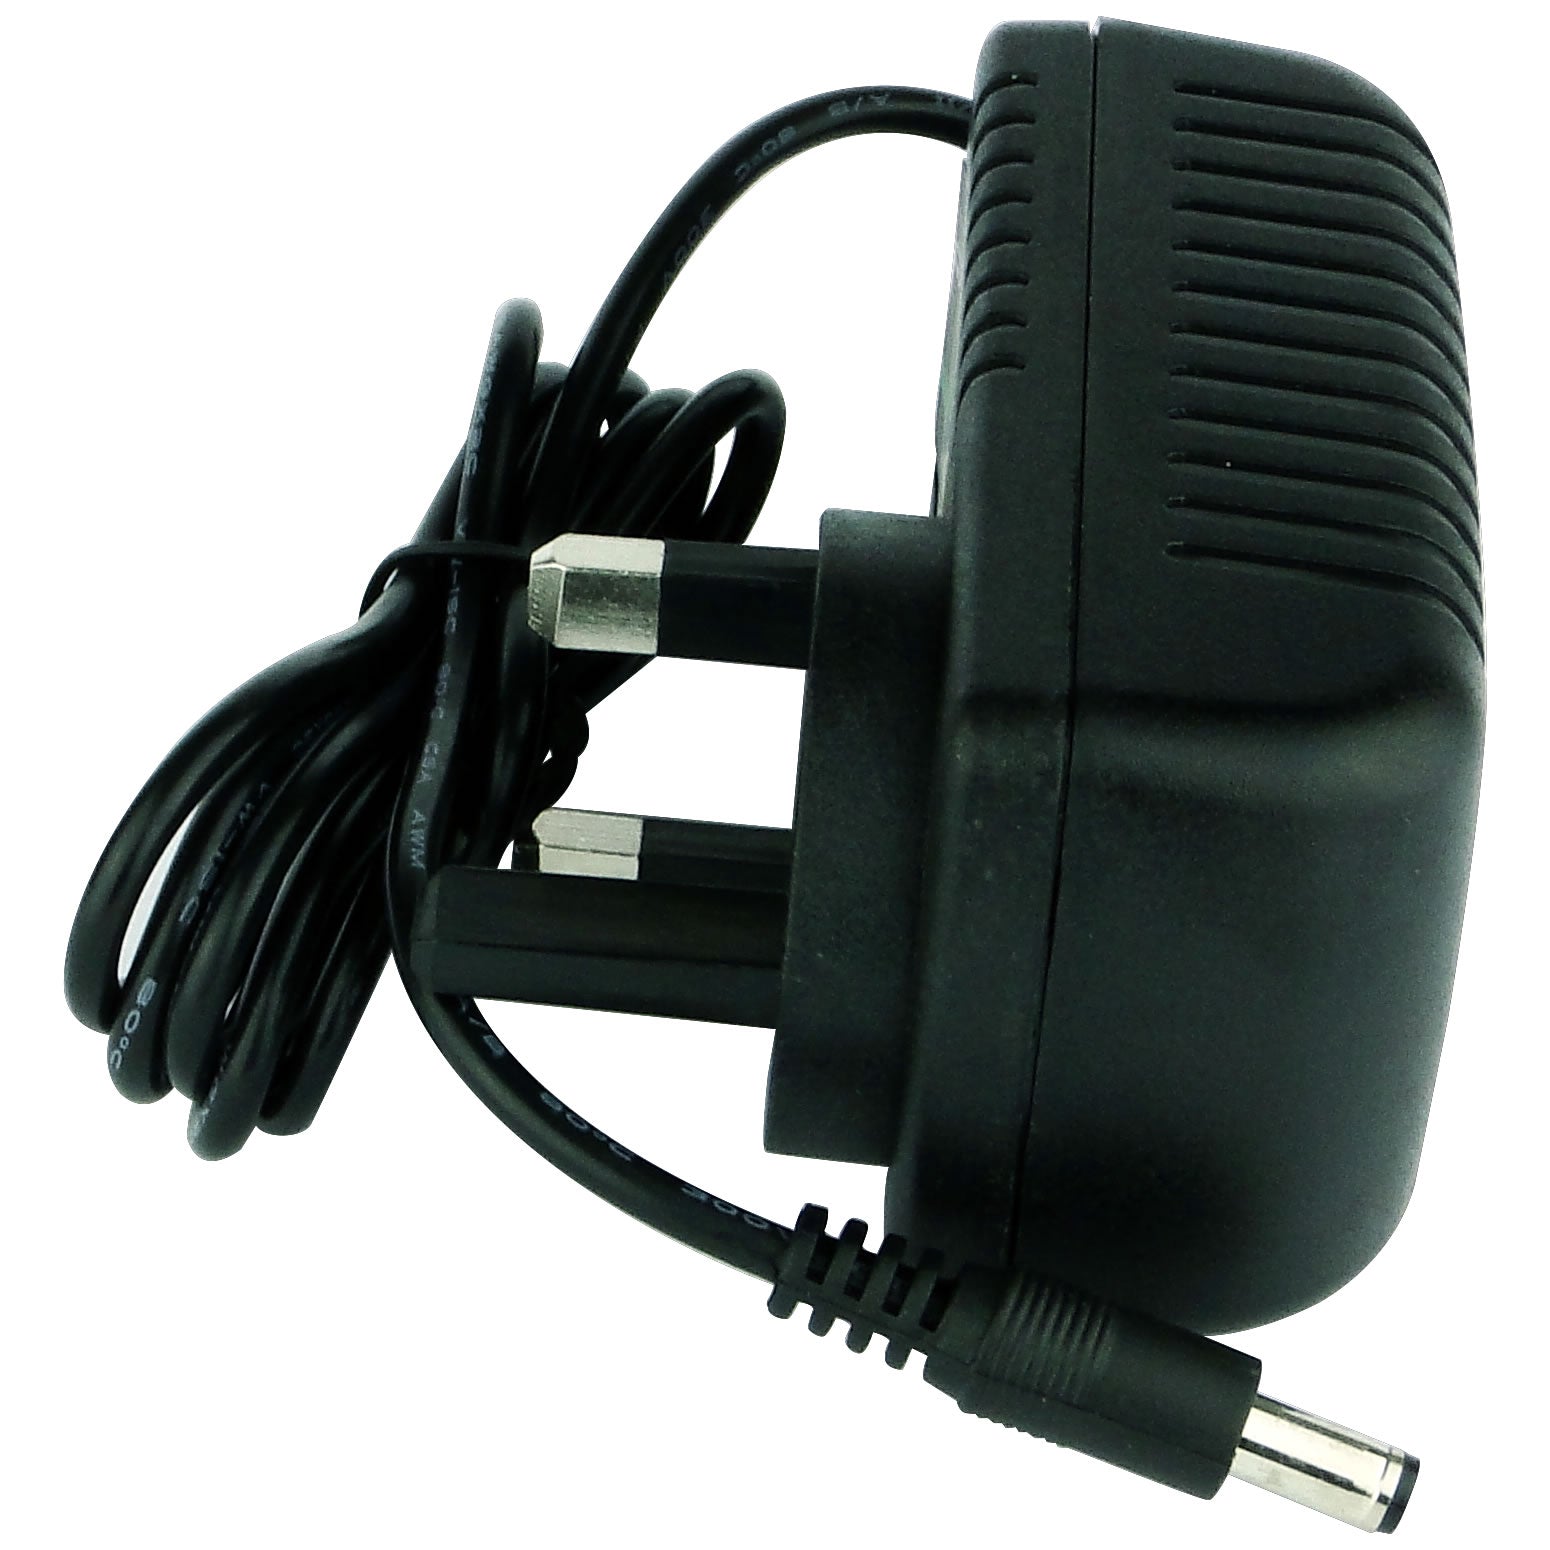 1A 12V DC Plug top Power Adapter